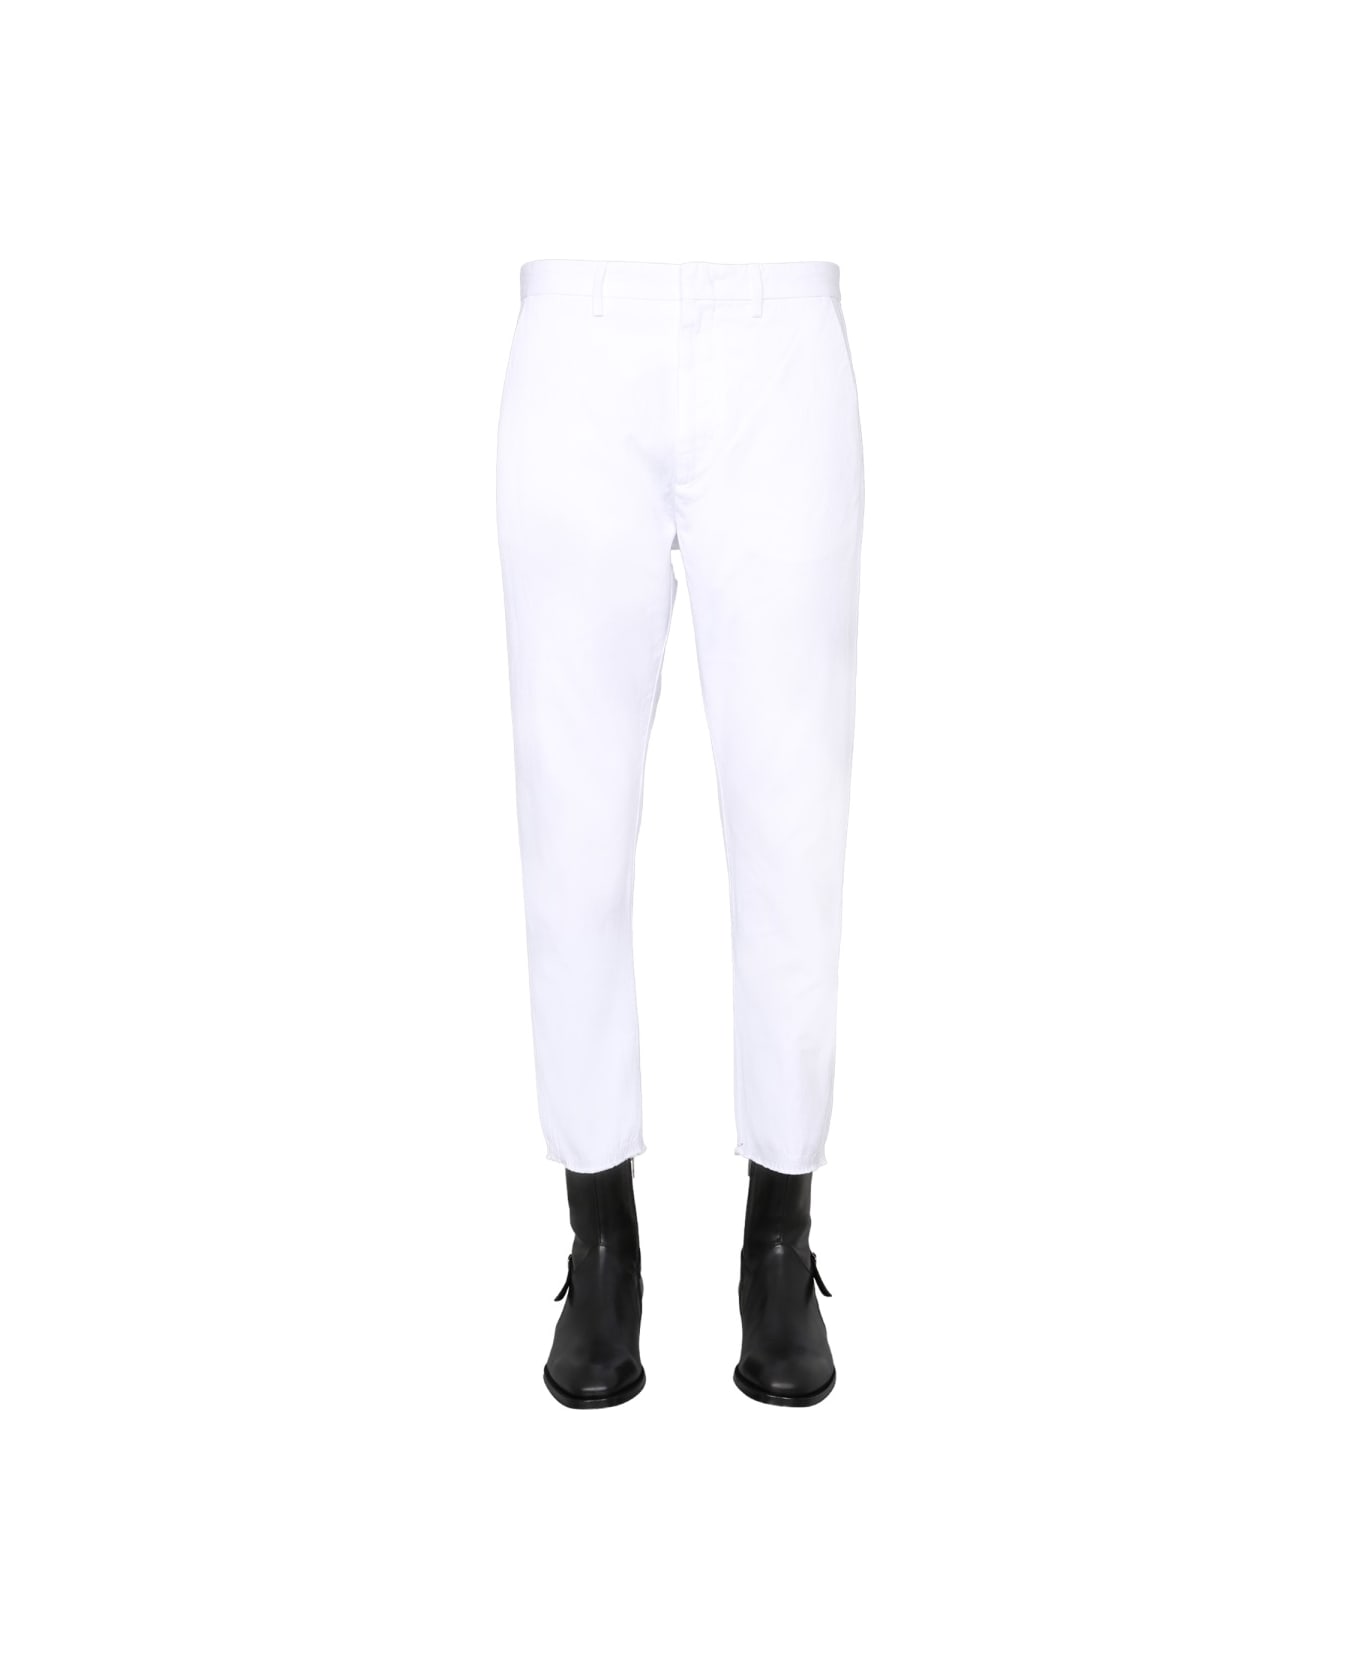 Pence "baldo" / V "trousers - WHITE